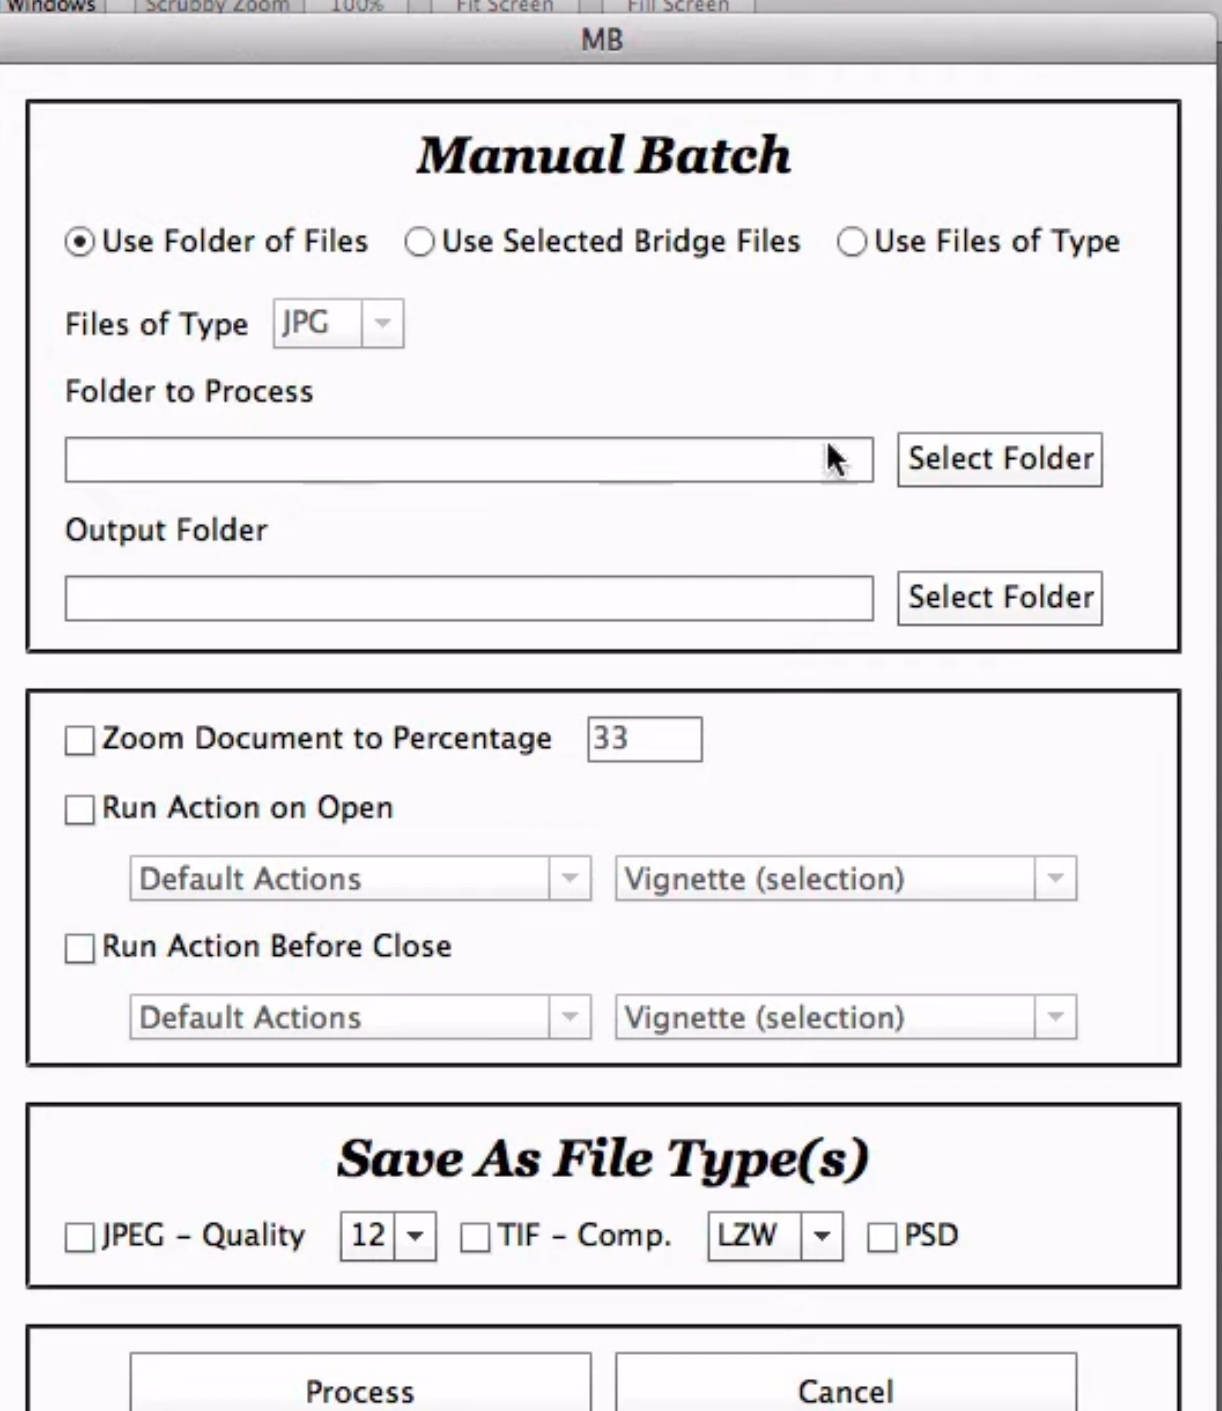 Image of Manual Batch interface